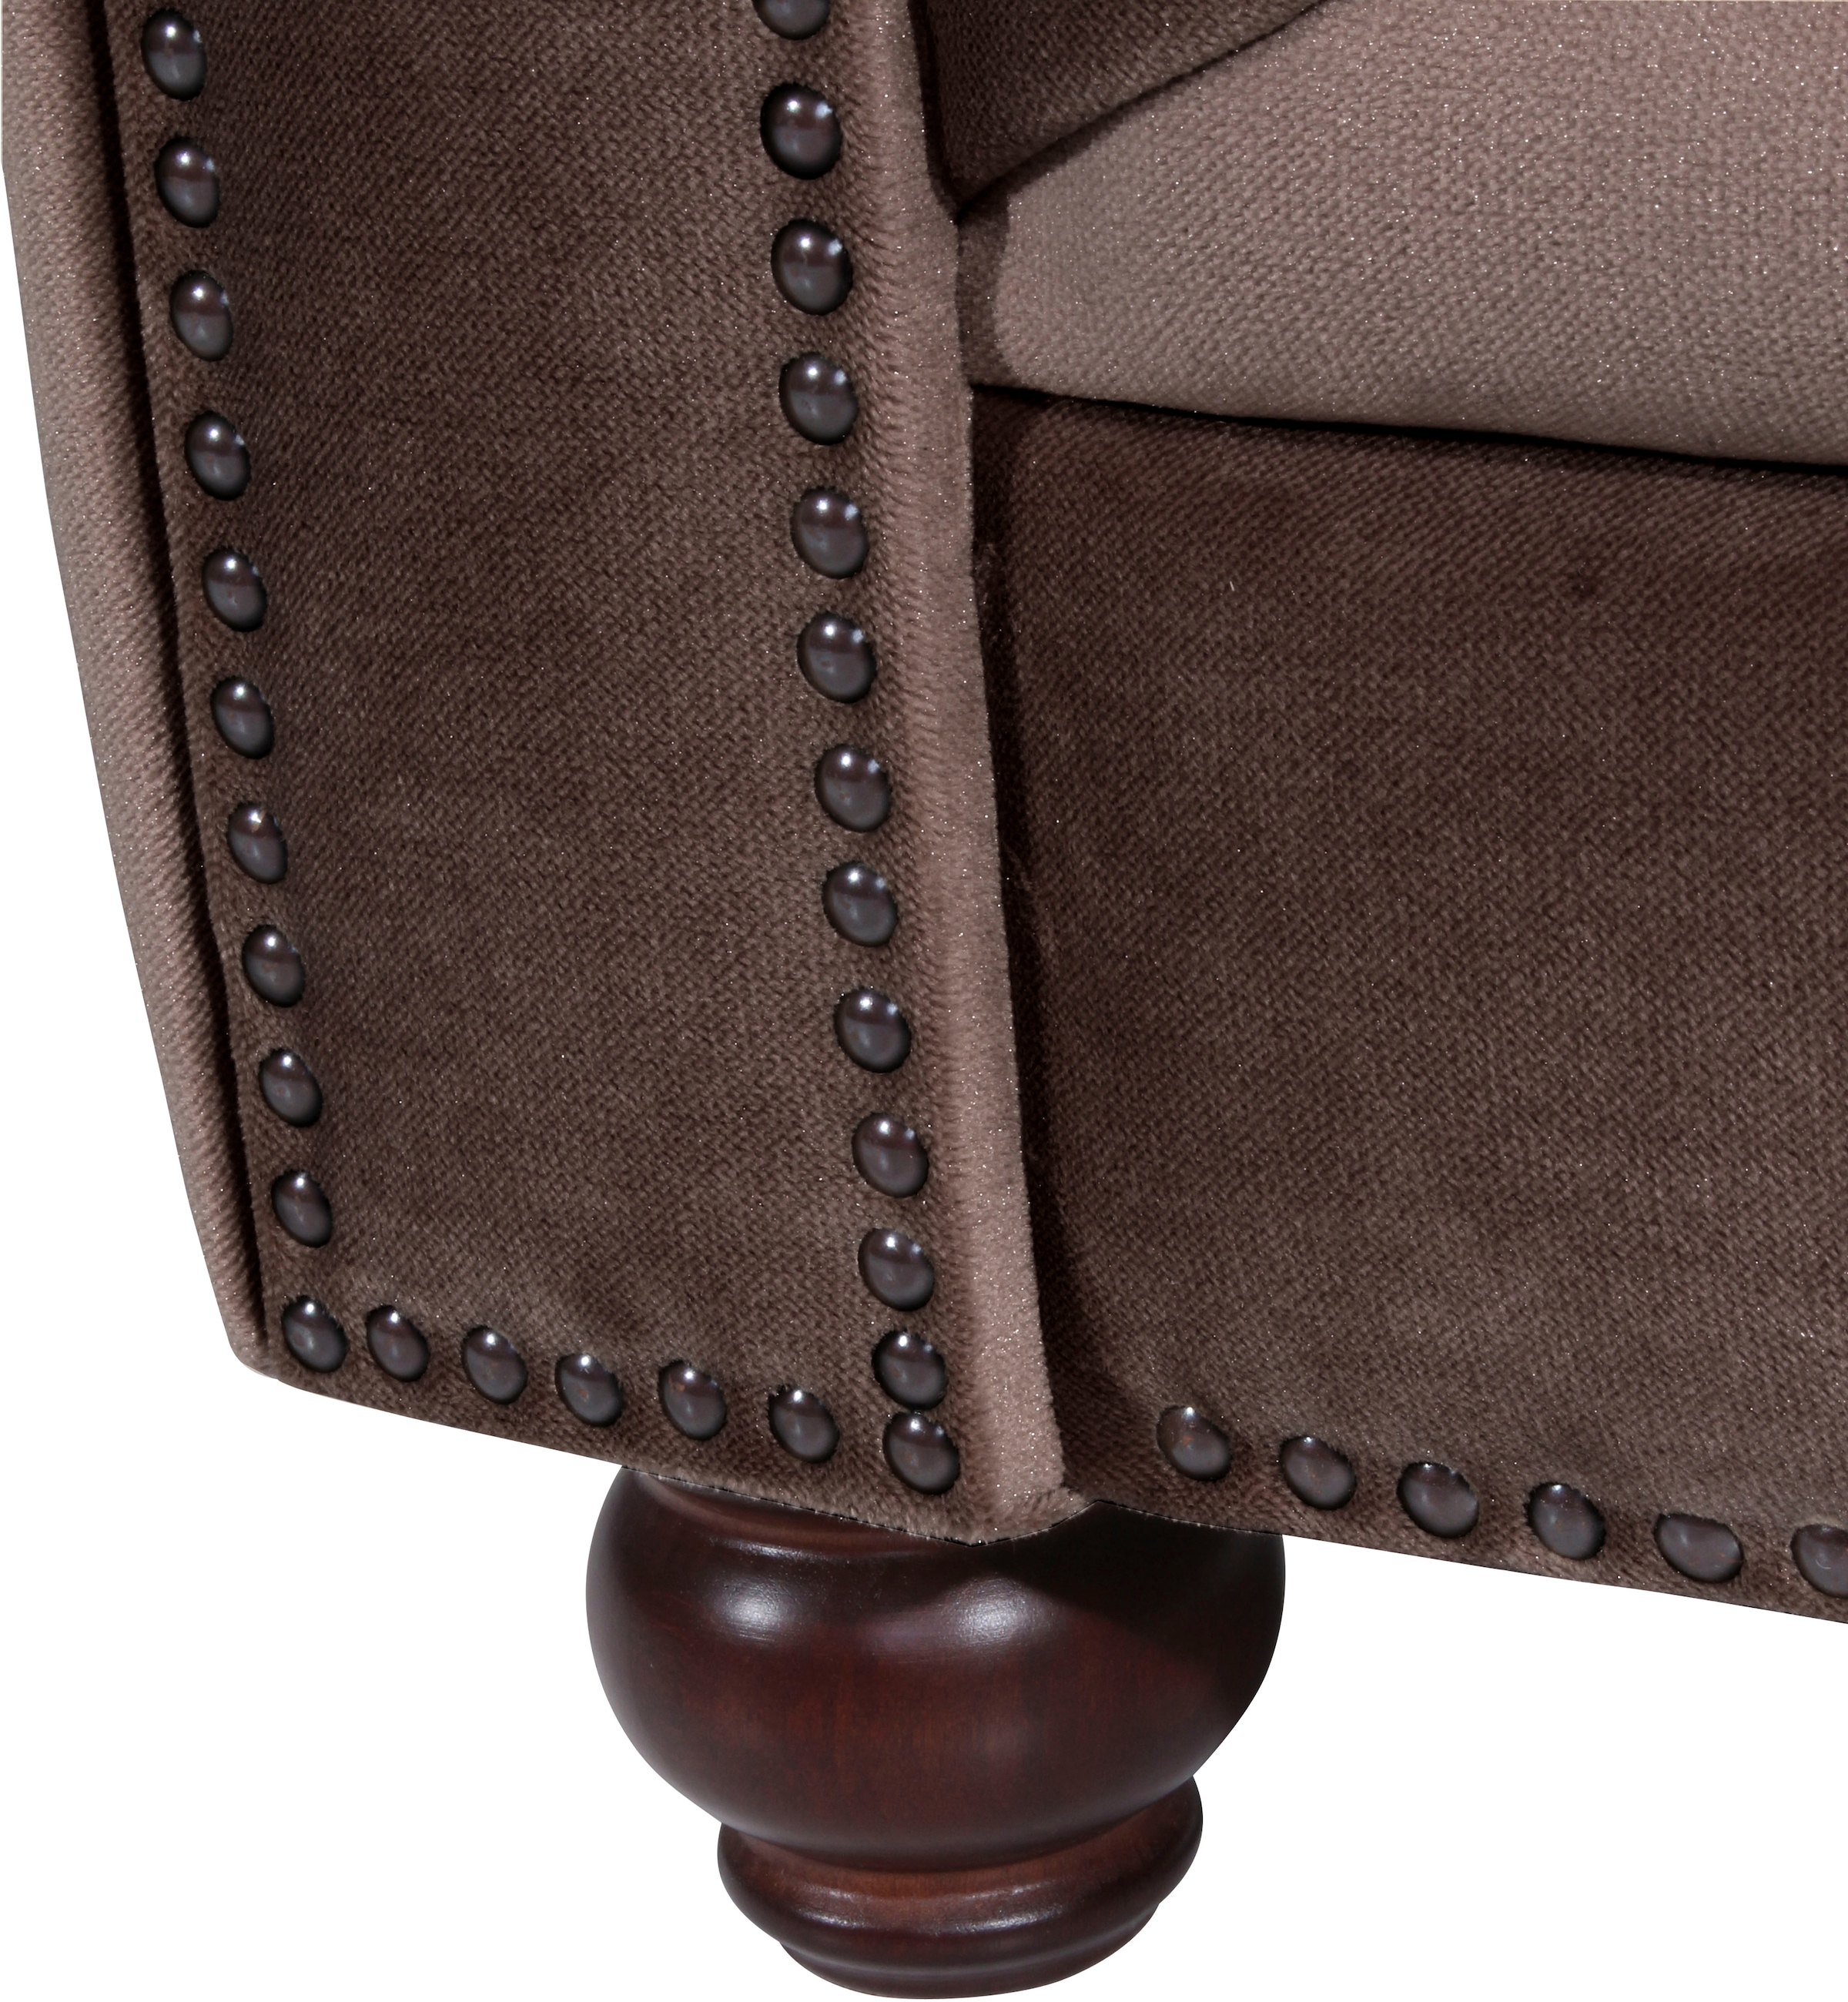 Max Winzer® Chesterfield-Sofa »Old England«, im Retrolook, Breite 218 cm